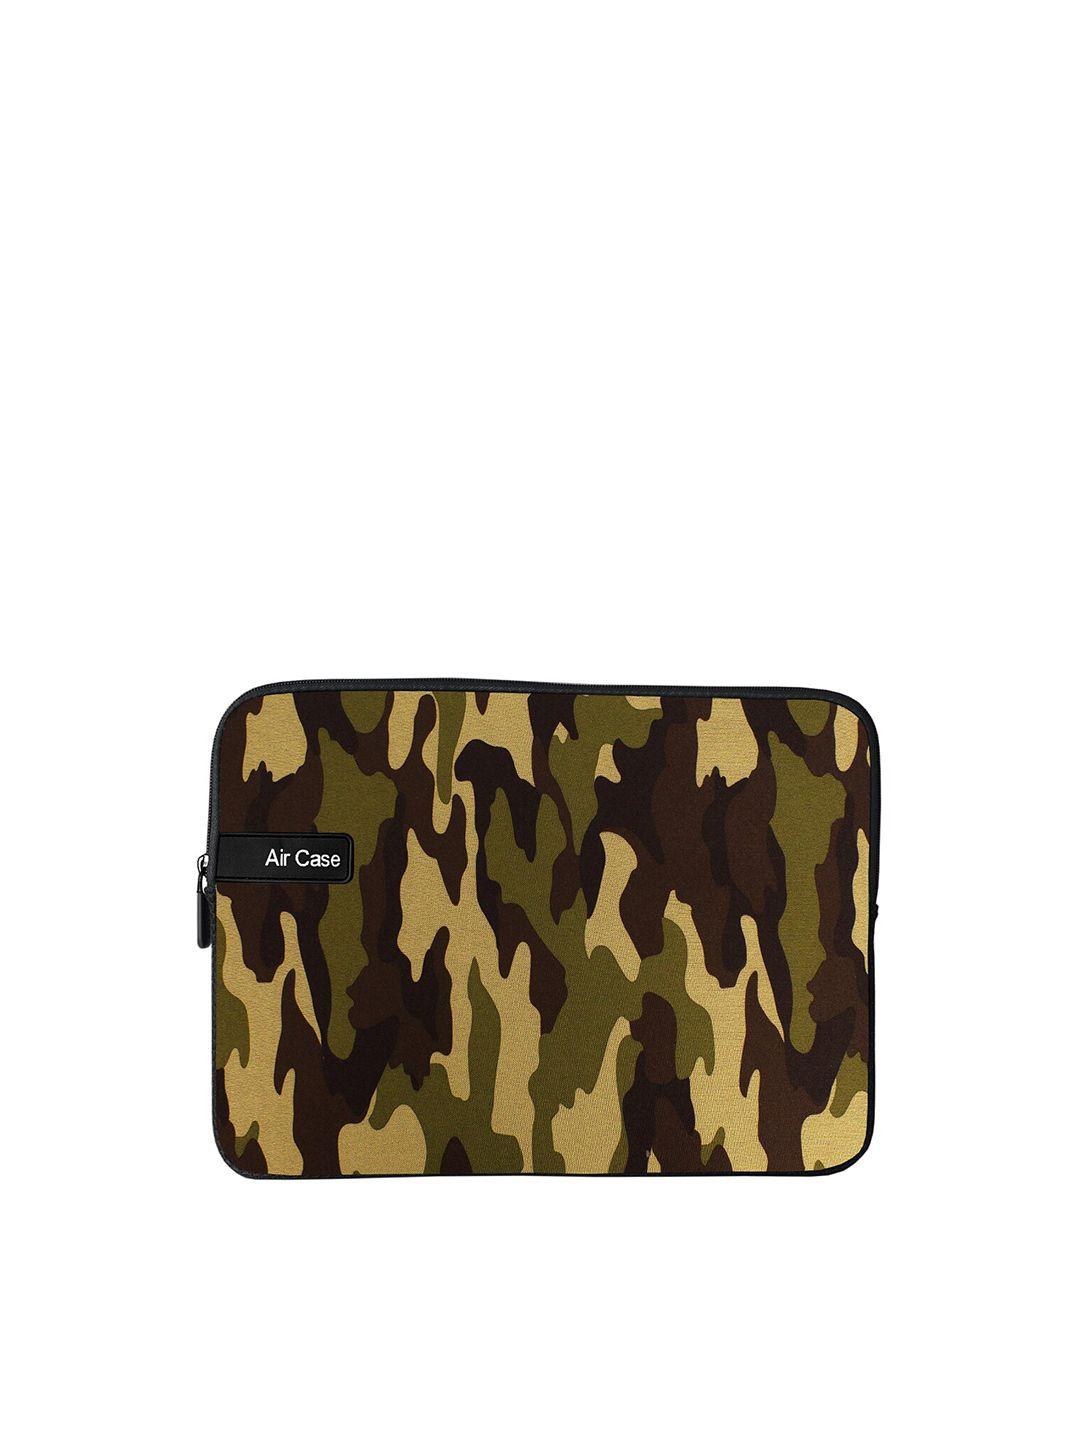 aircase unisex brown & green printed laptop sleeve